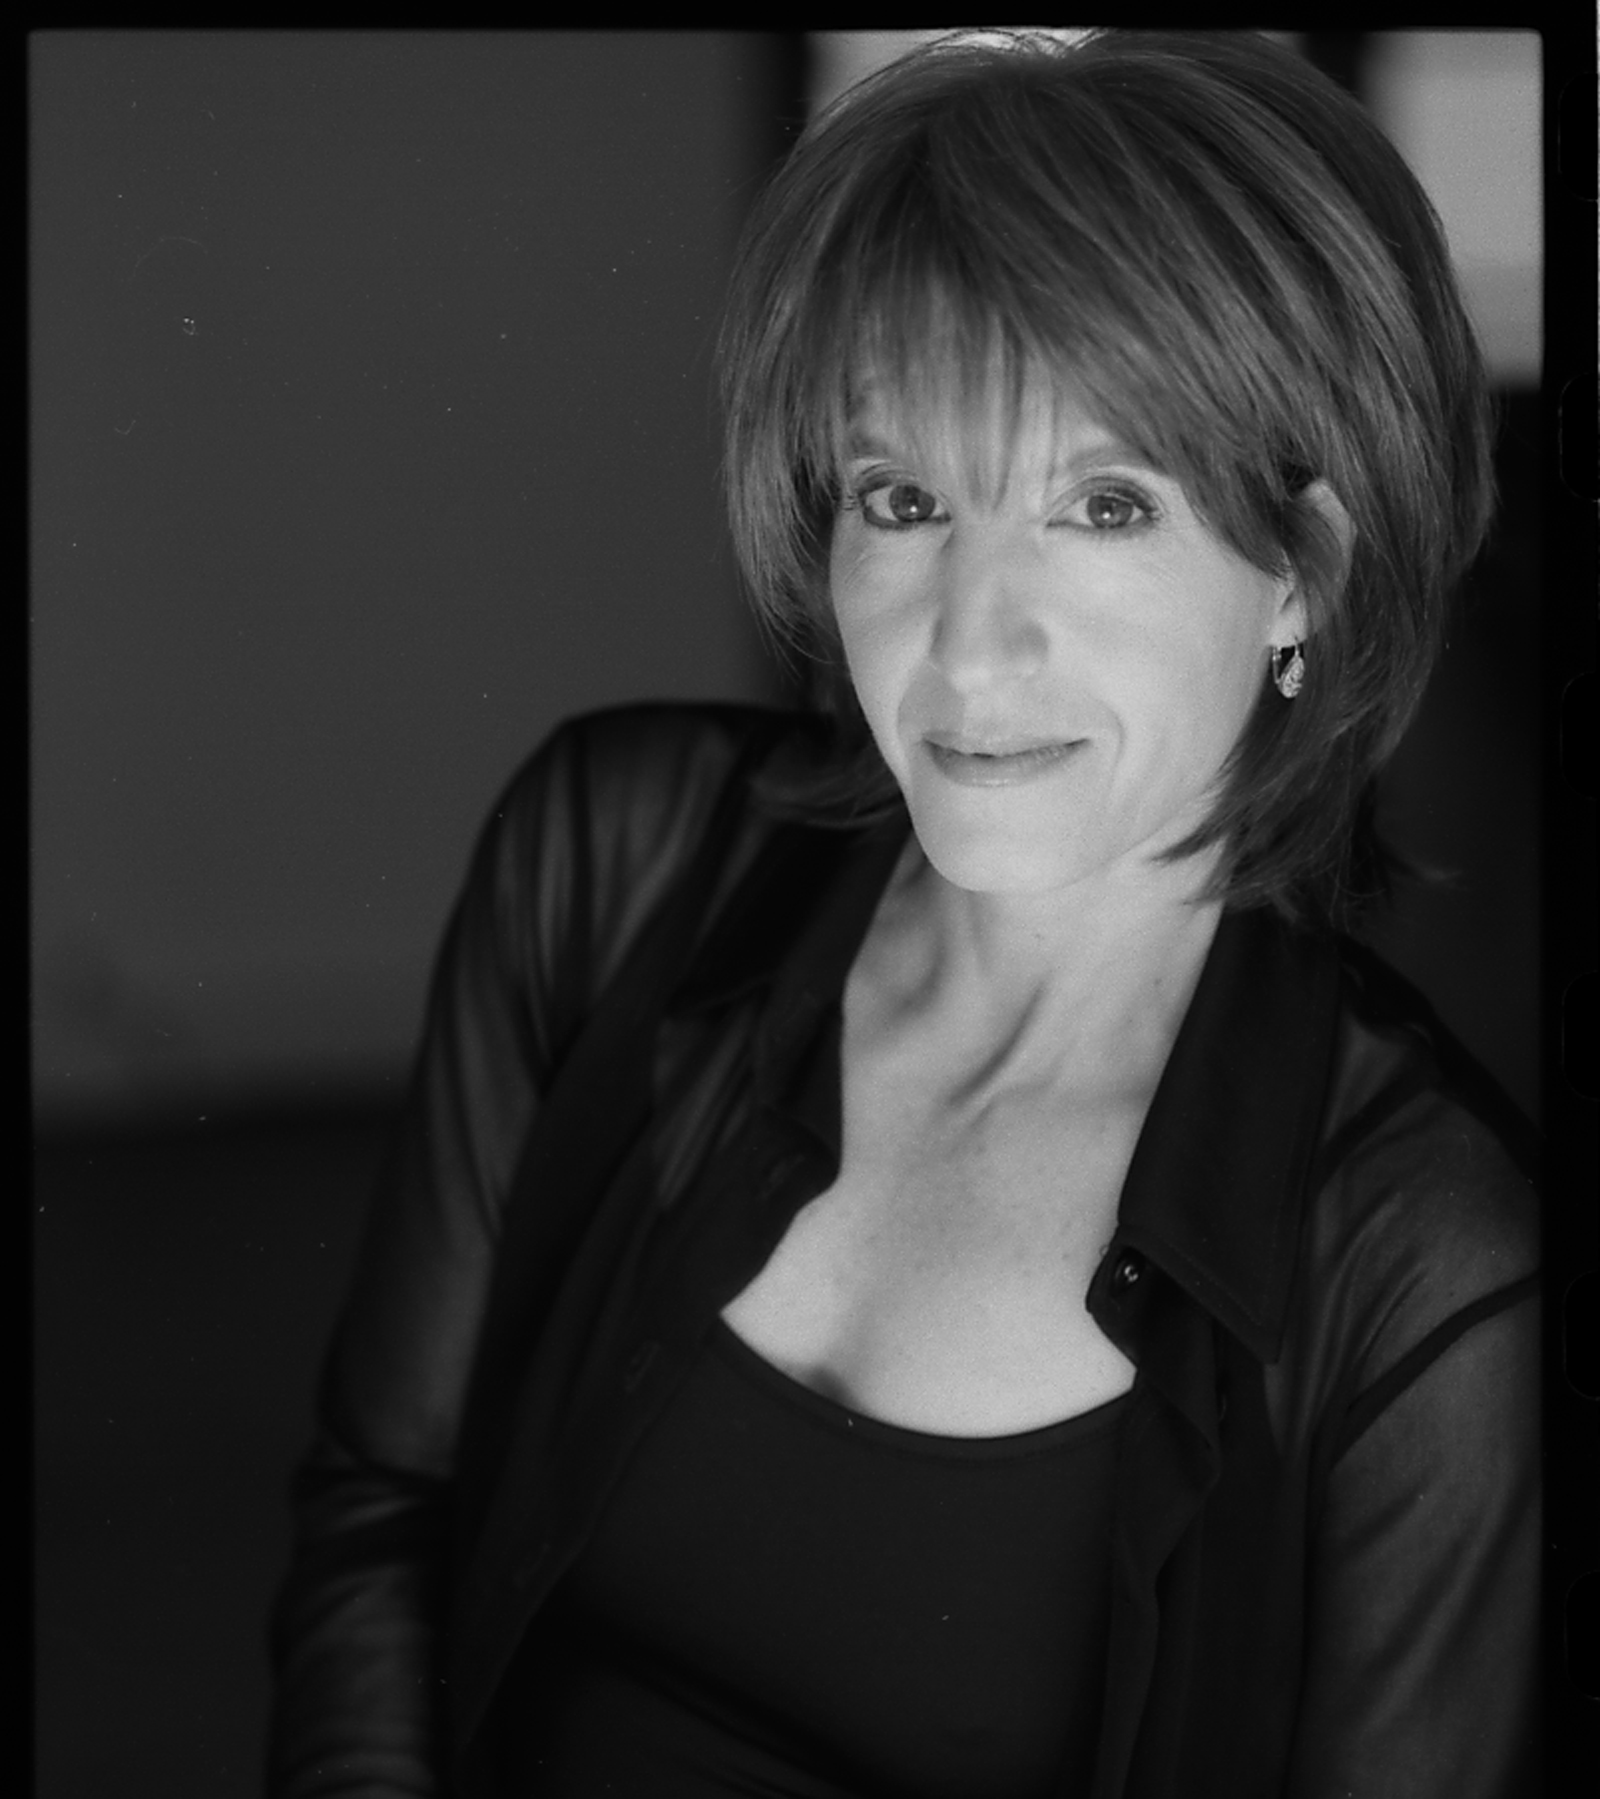 Lynn Isenberg, Novelist, Screenwriter, Producer and Author of "Author Power: Profit Before You Publish"